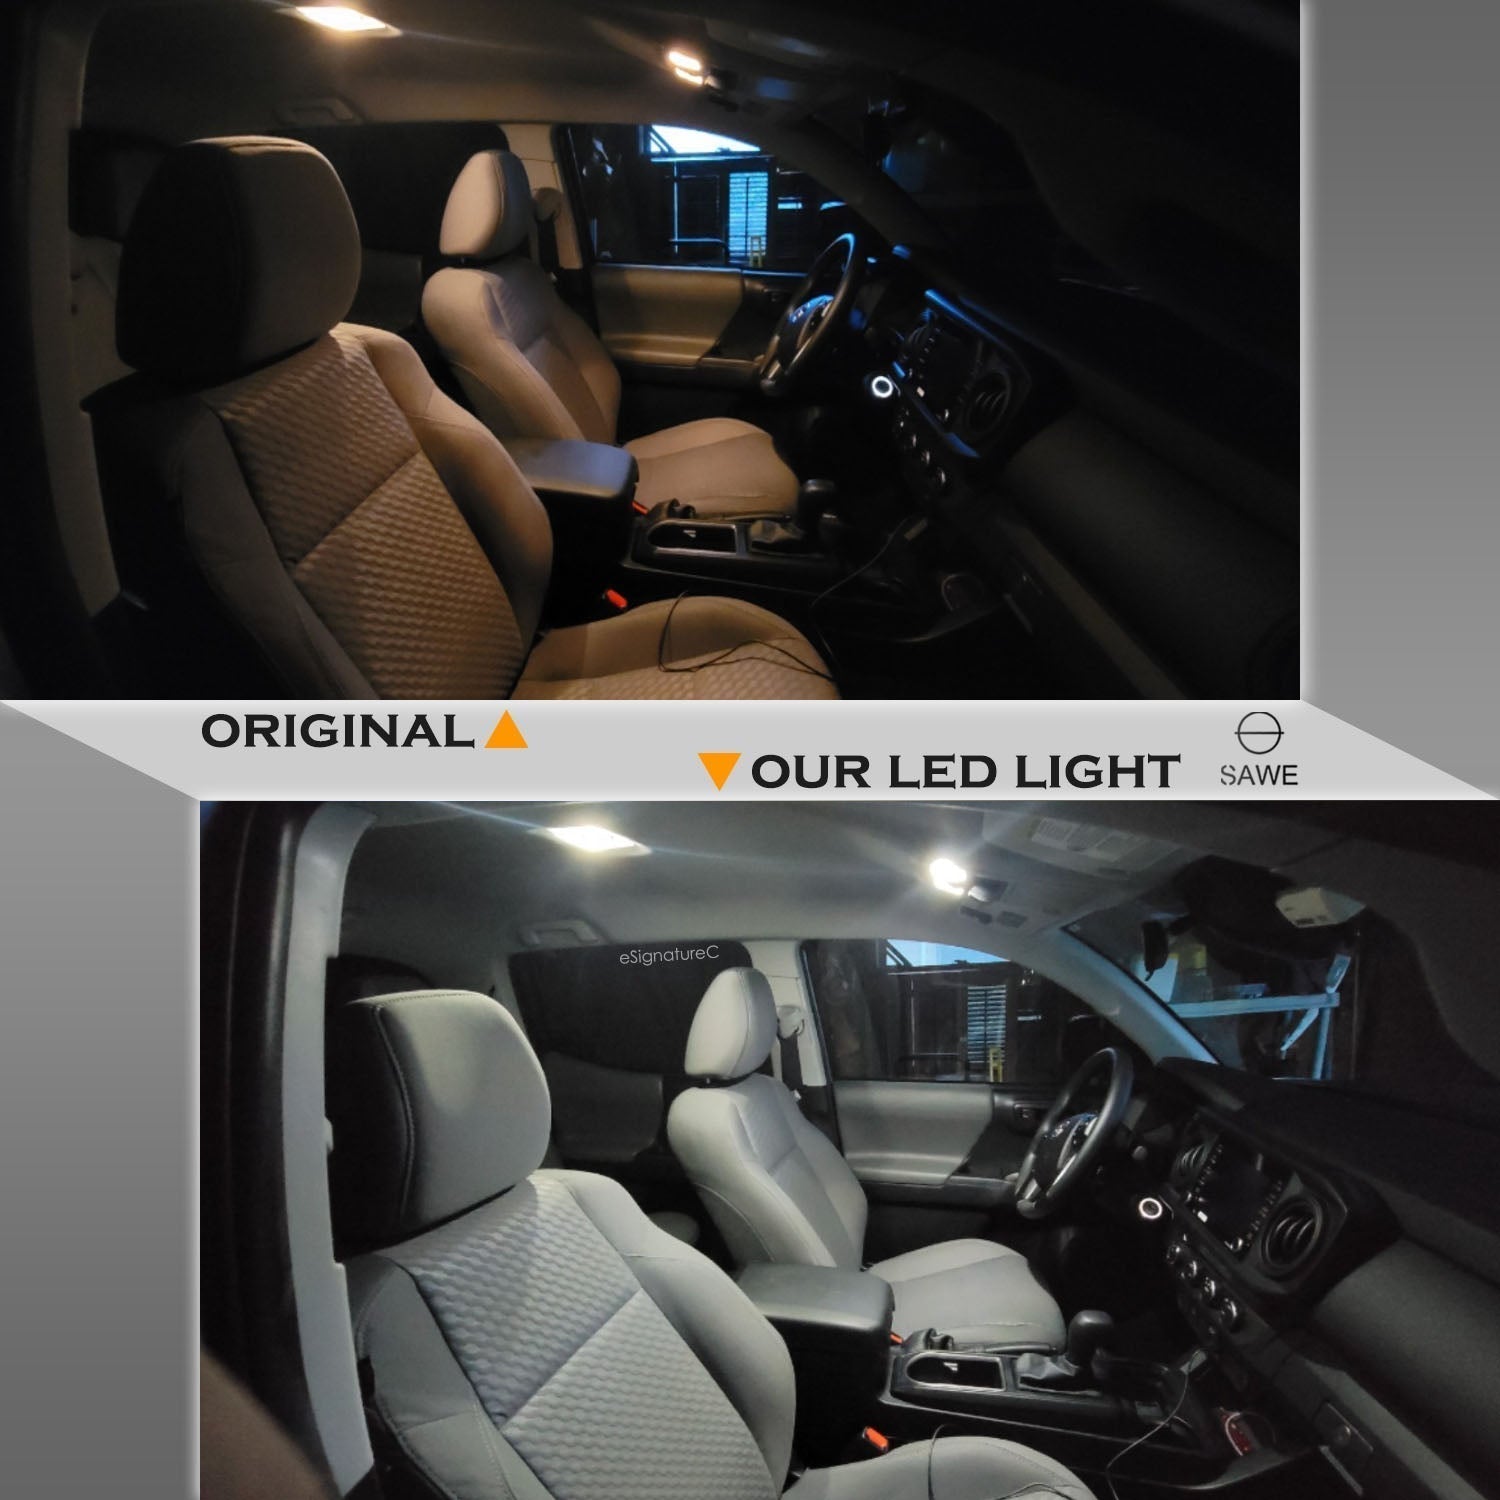 For Hyundai Tucson Interior LED Lights - Dome & Map Light Bulbs Package Kit for 2010 - 2015 - White